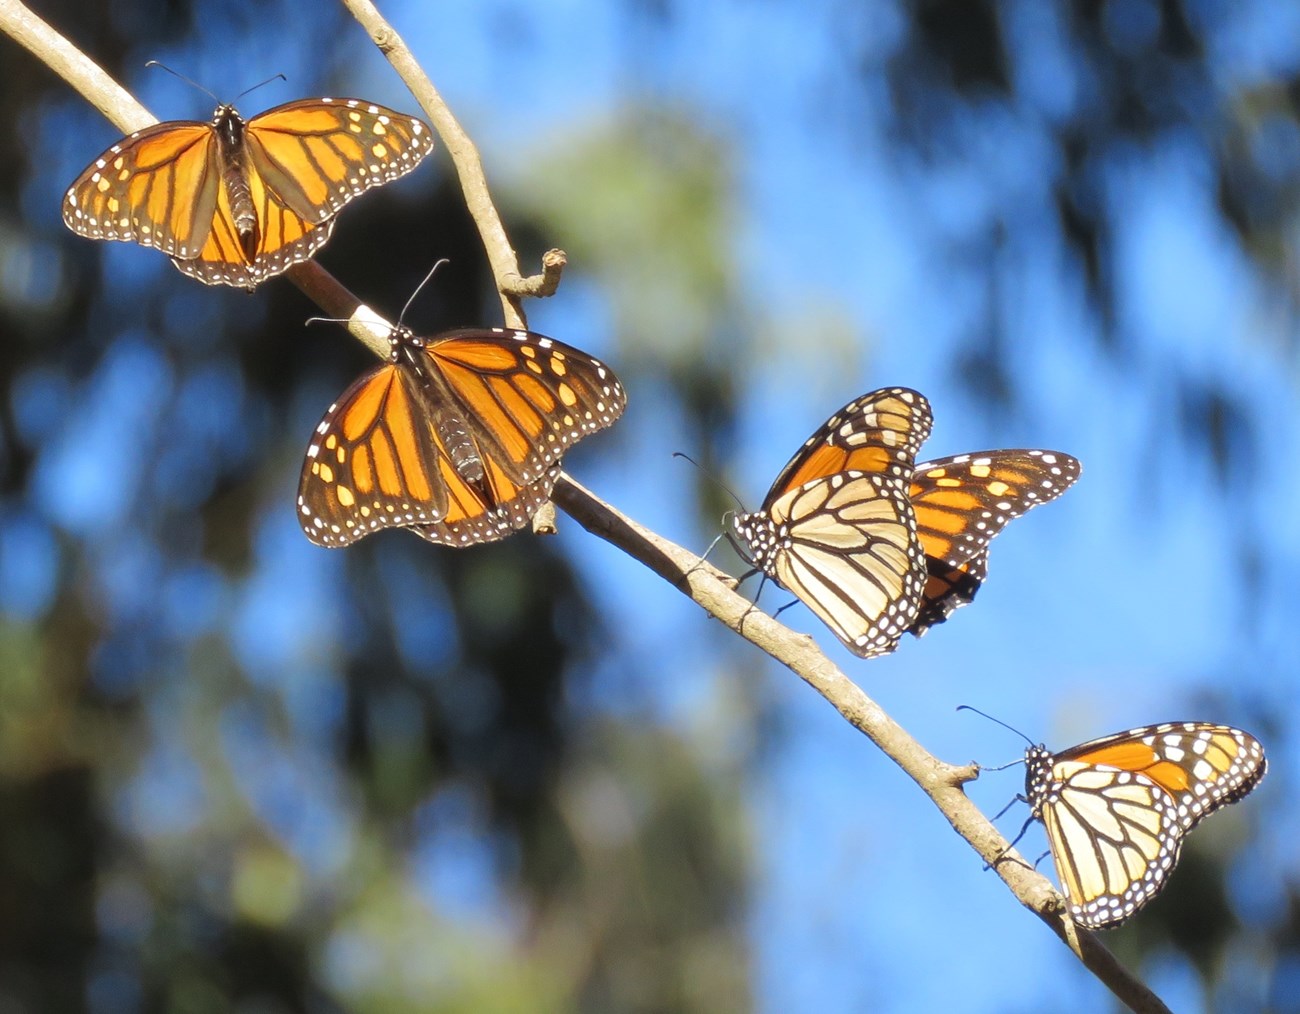 Four monarch butterflies share a branch in the sunlight